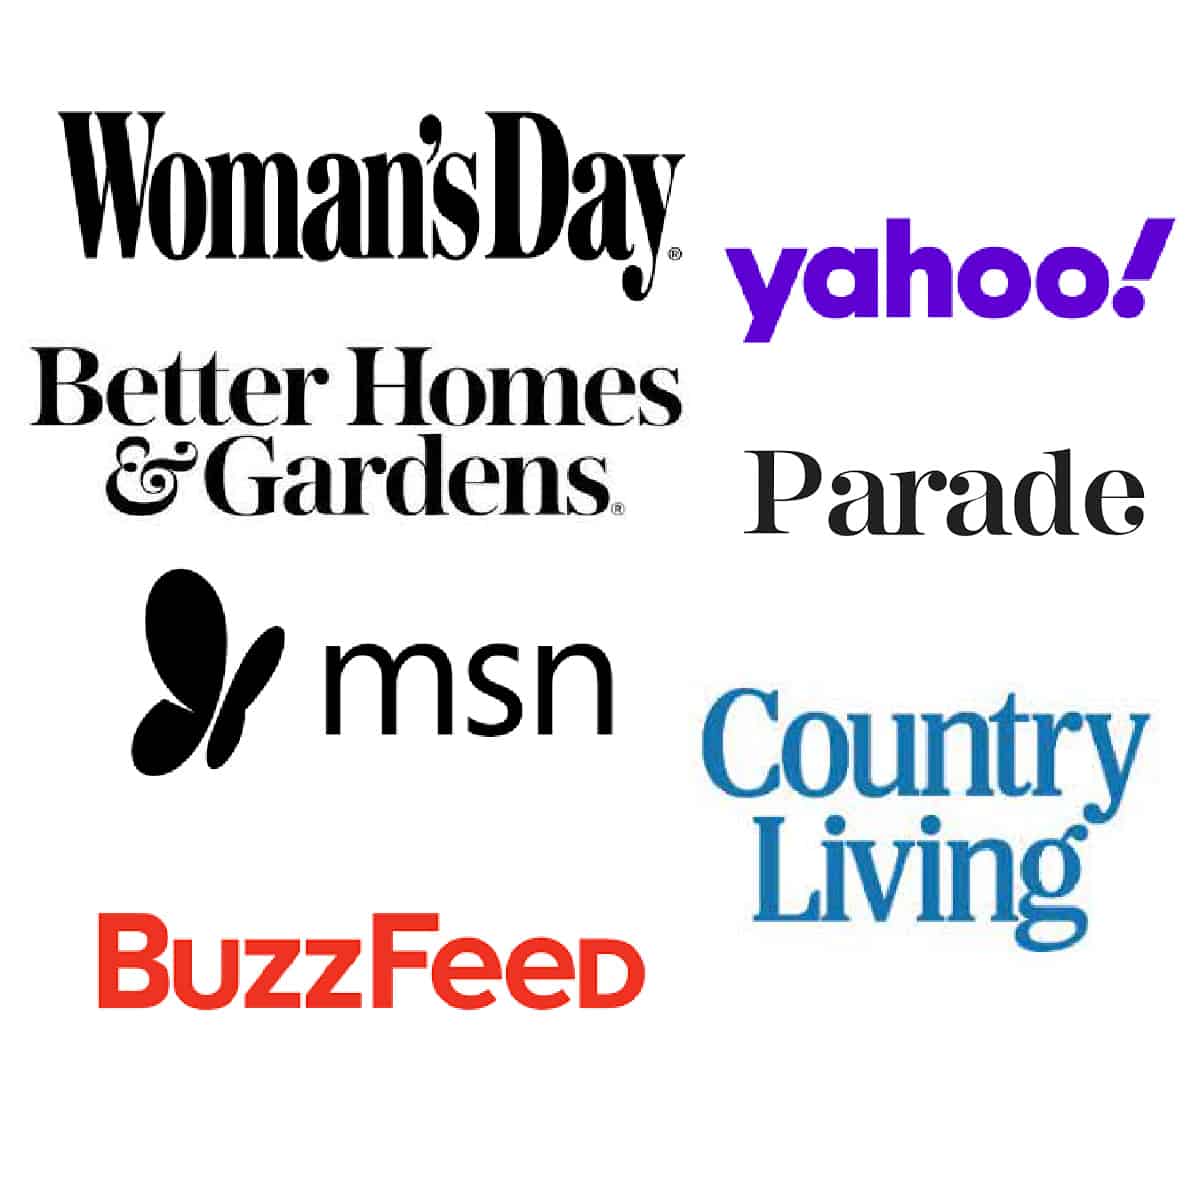 Logos of publications like yahoo, Parade magazine, MSN.